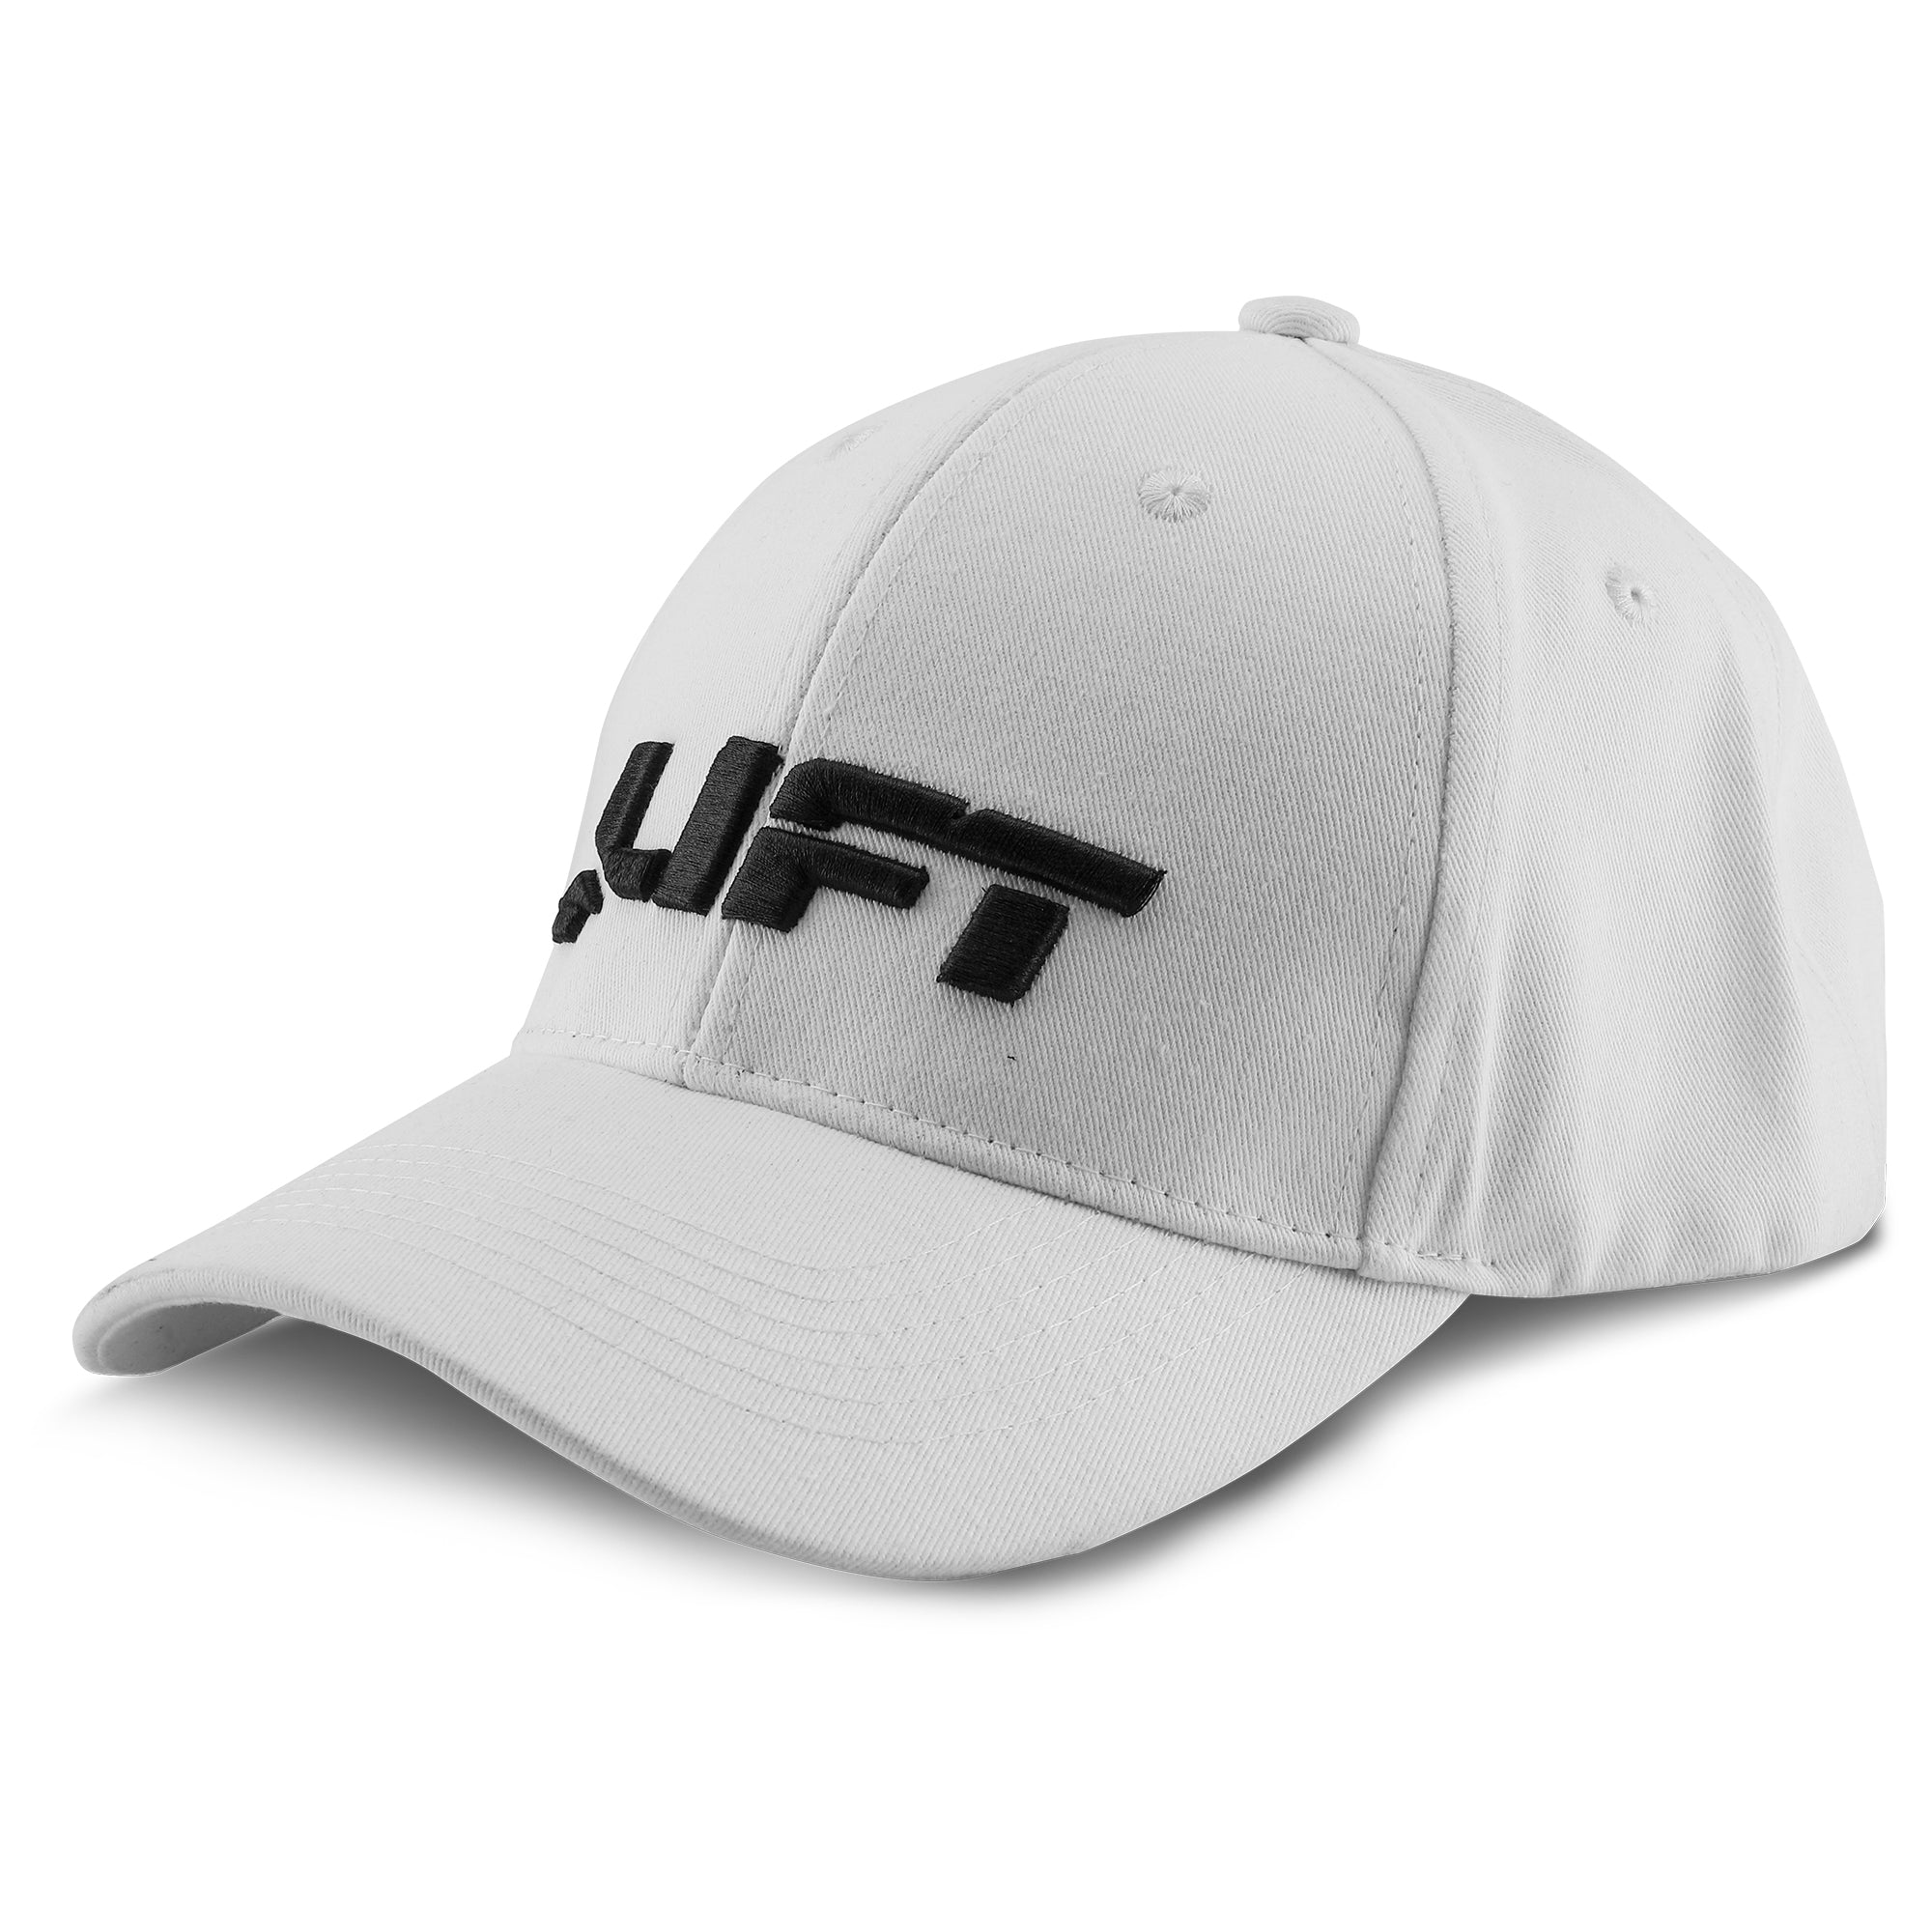 Corp Lift Hat